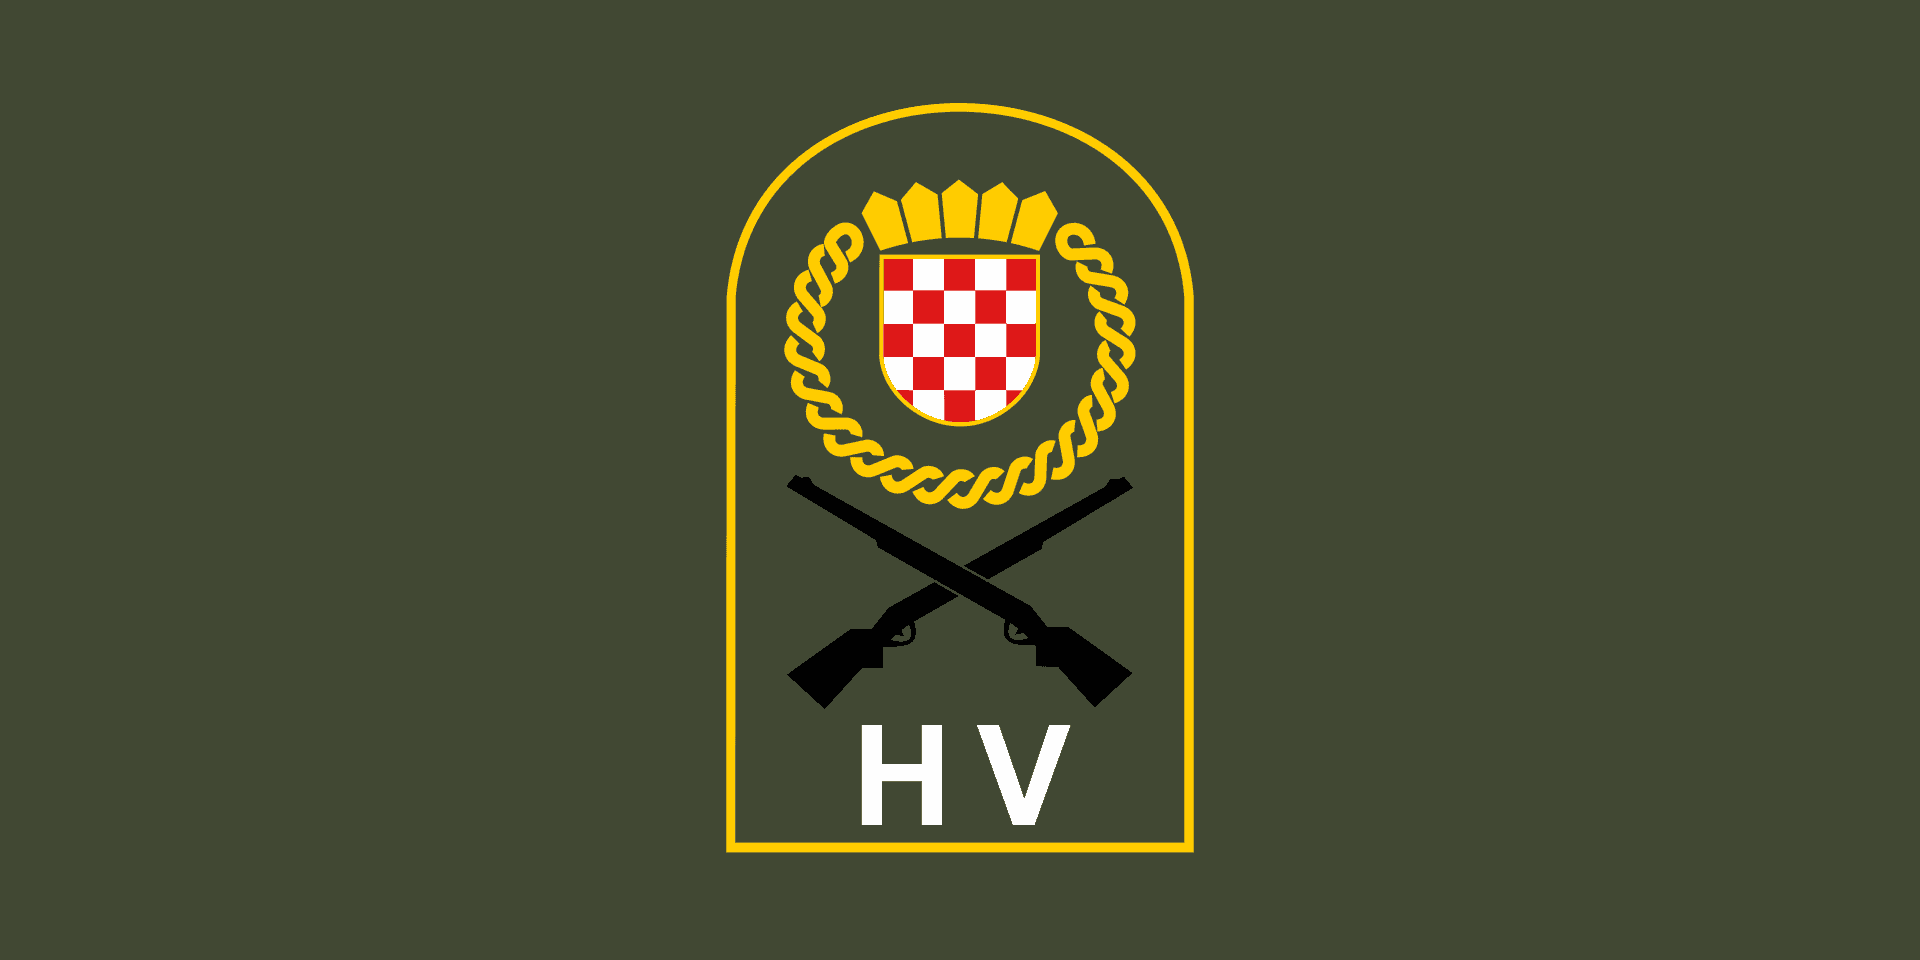 Army of Croatia